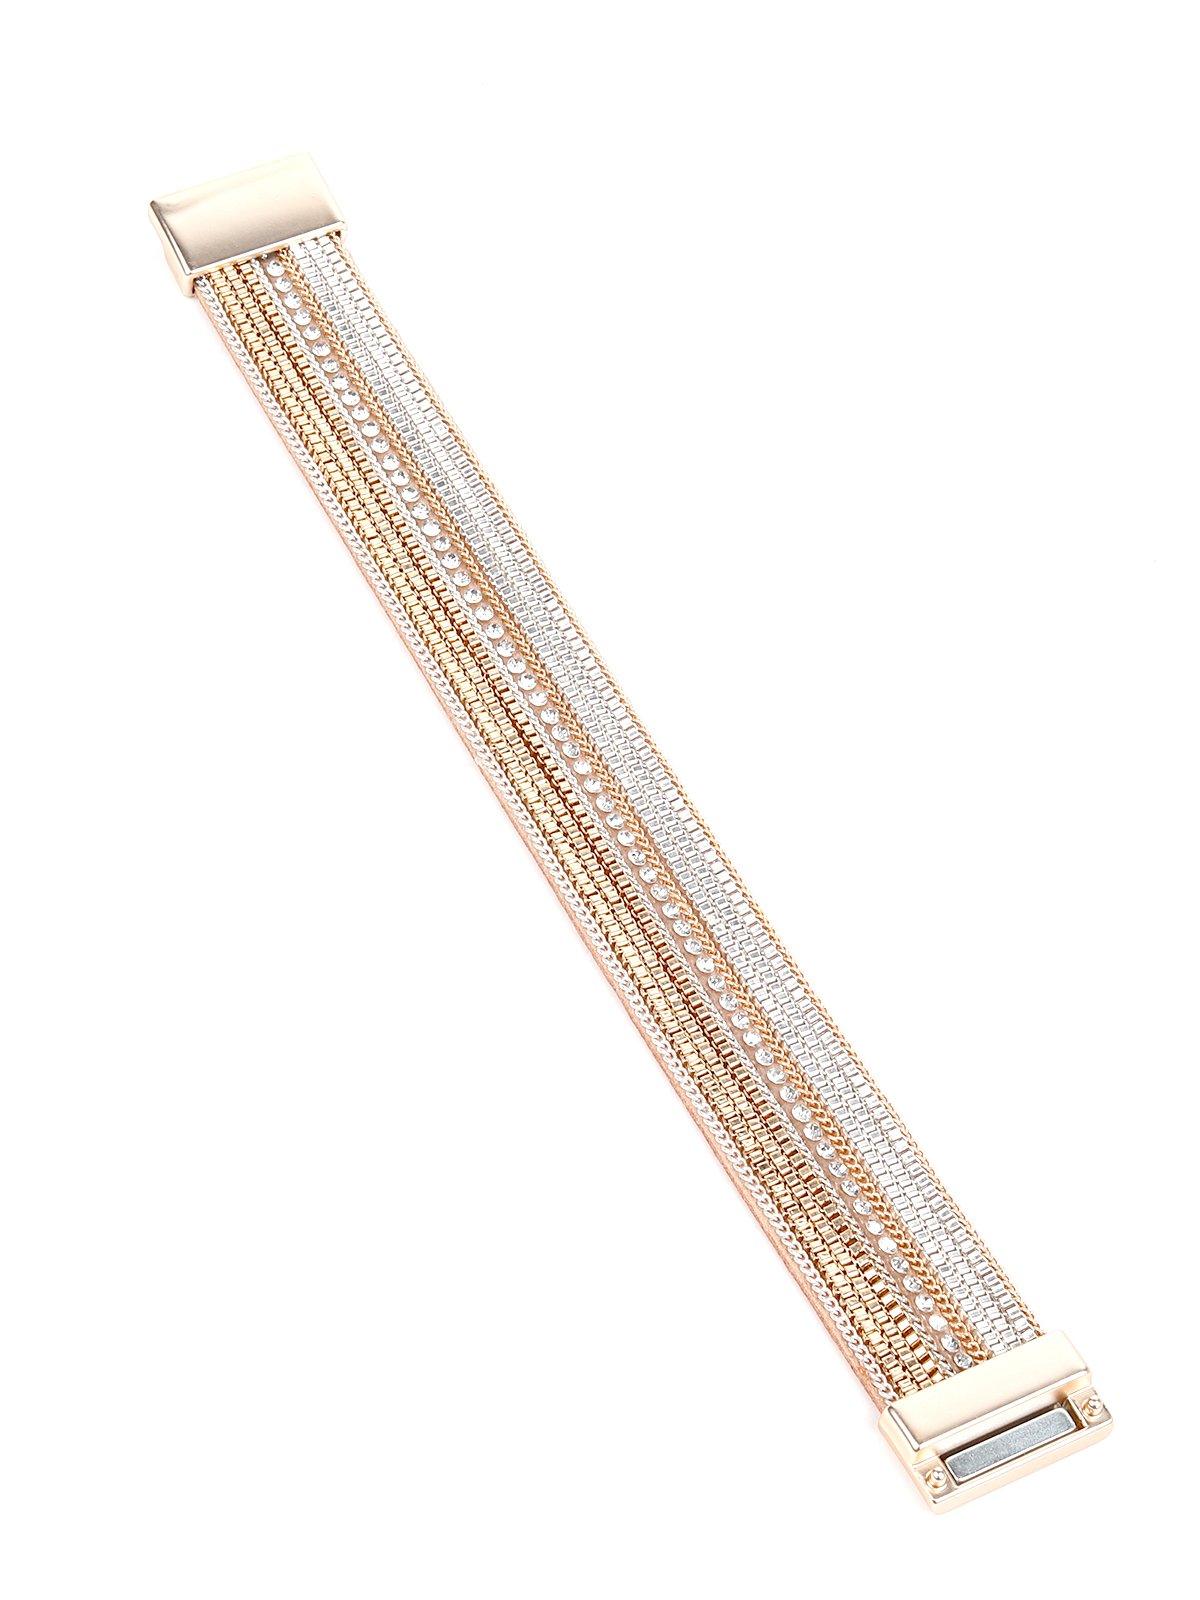 Wide Gold Layered Studded Cuff Bracelet - Odette